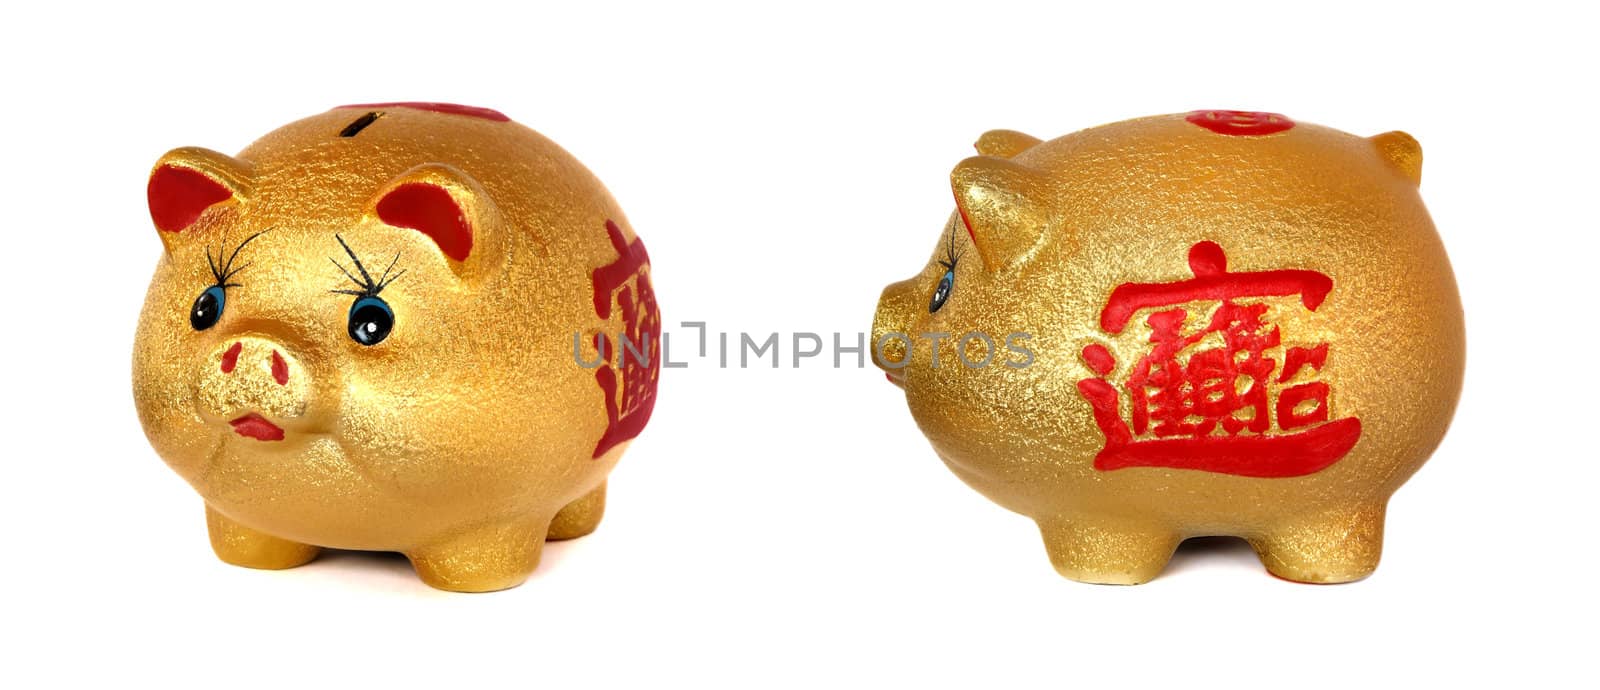 The Golden Pig piggy bank on white background. by opasstudio